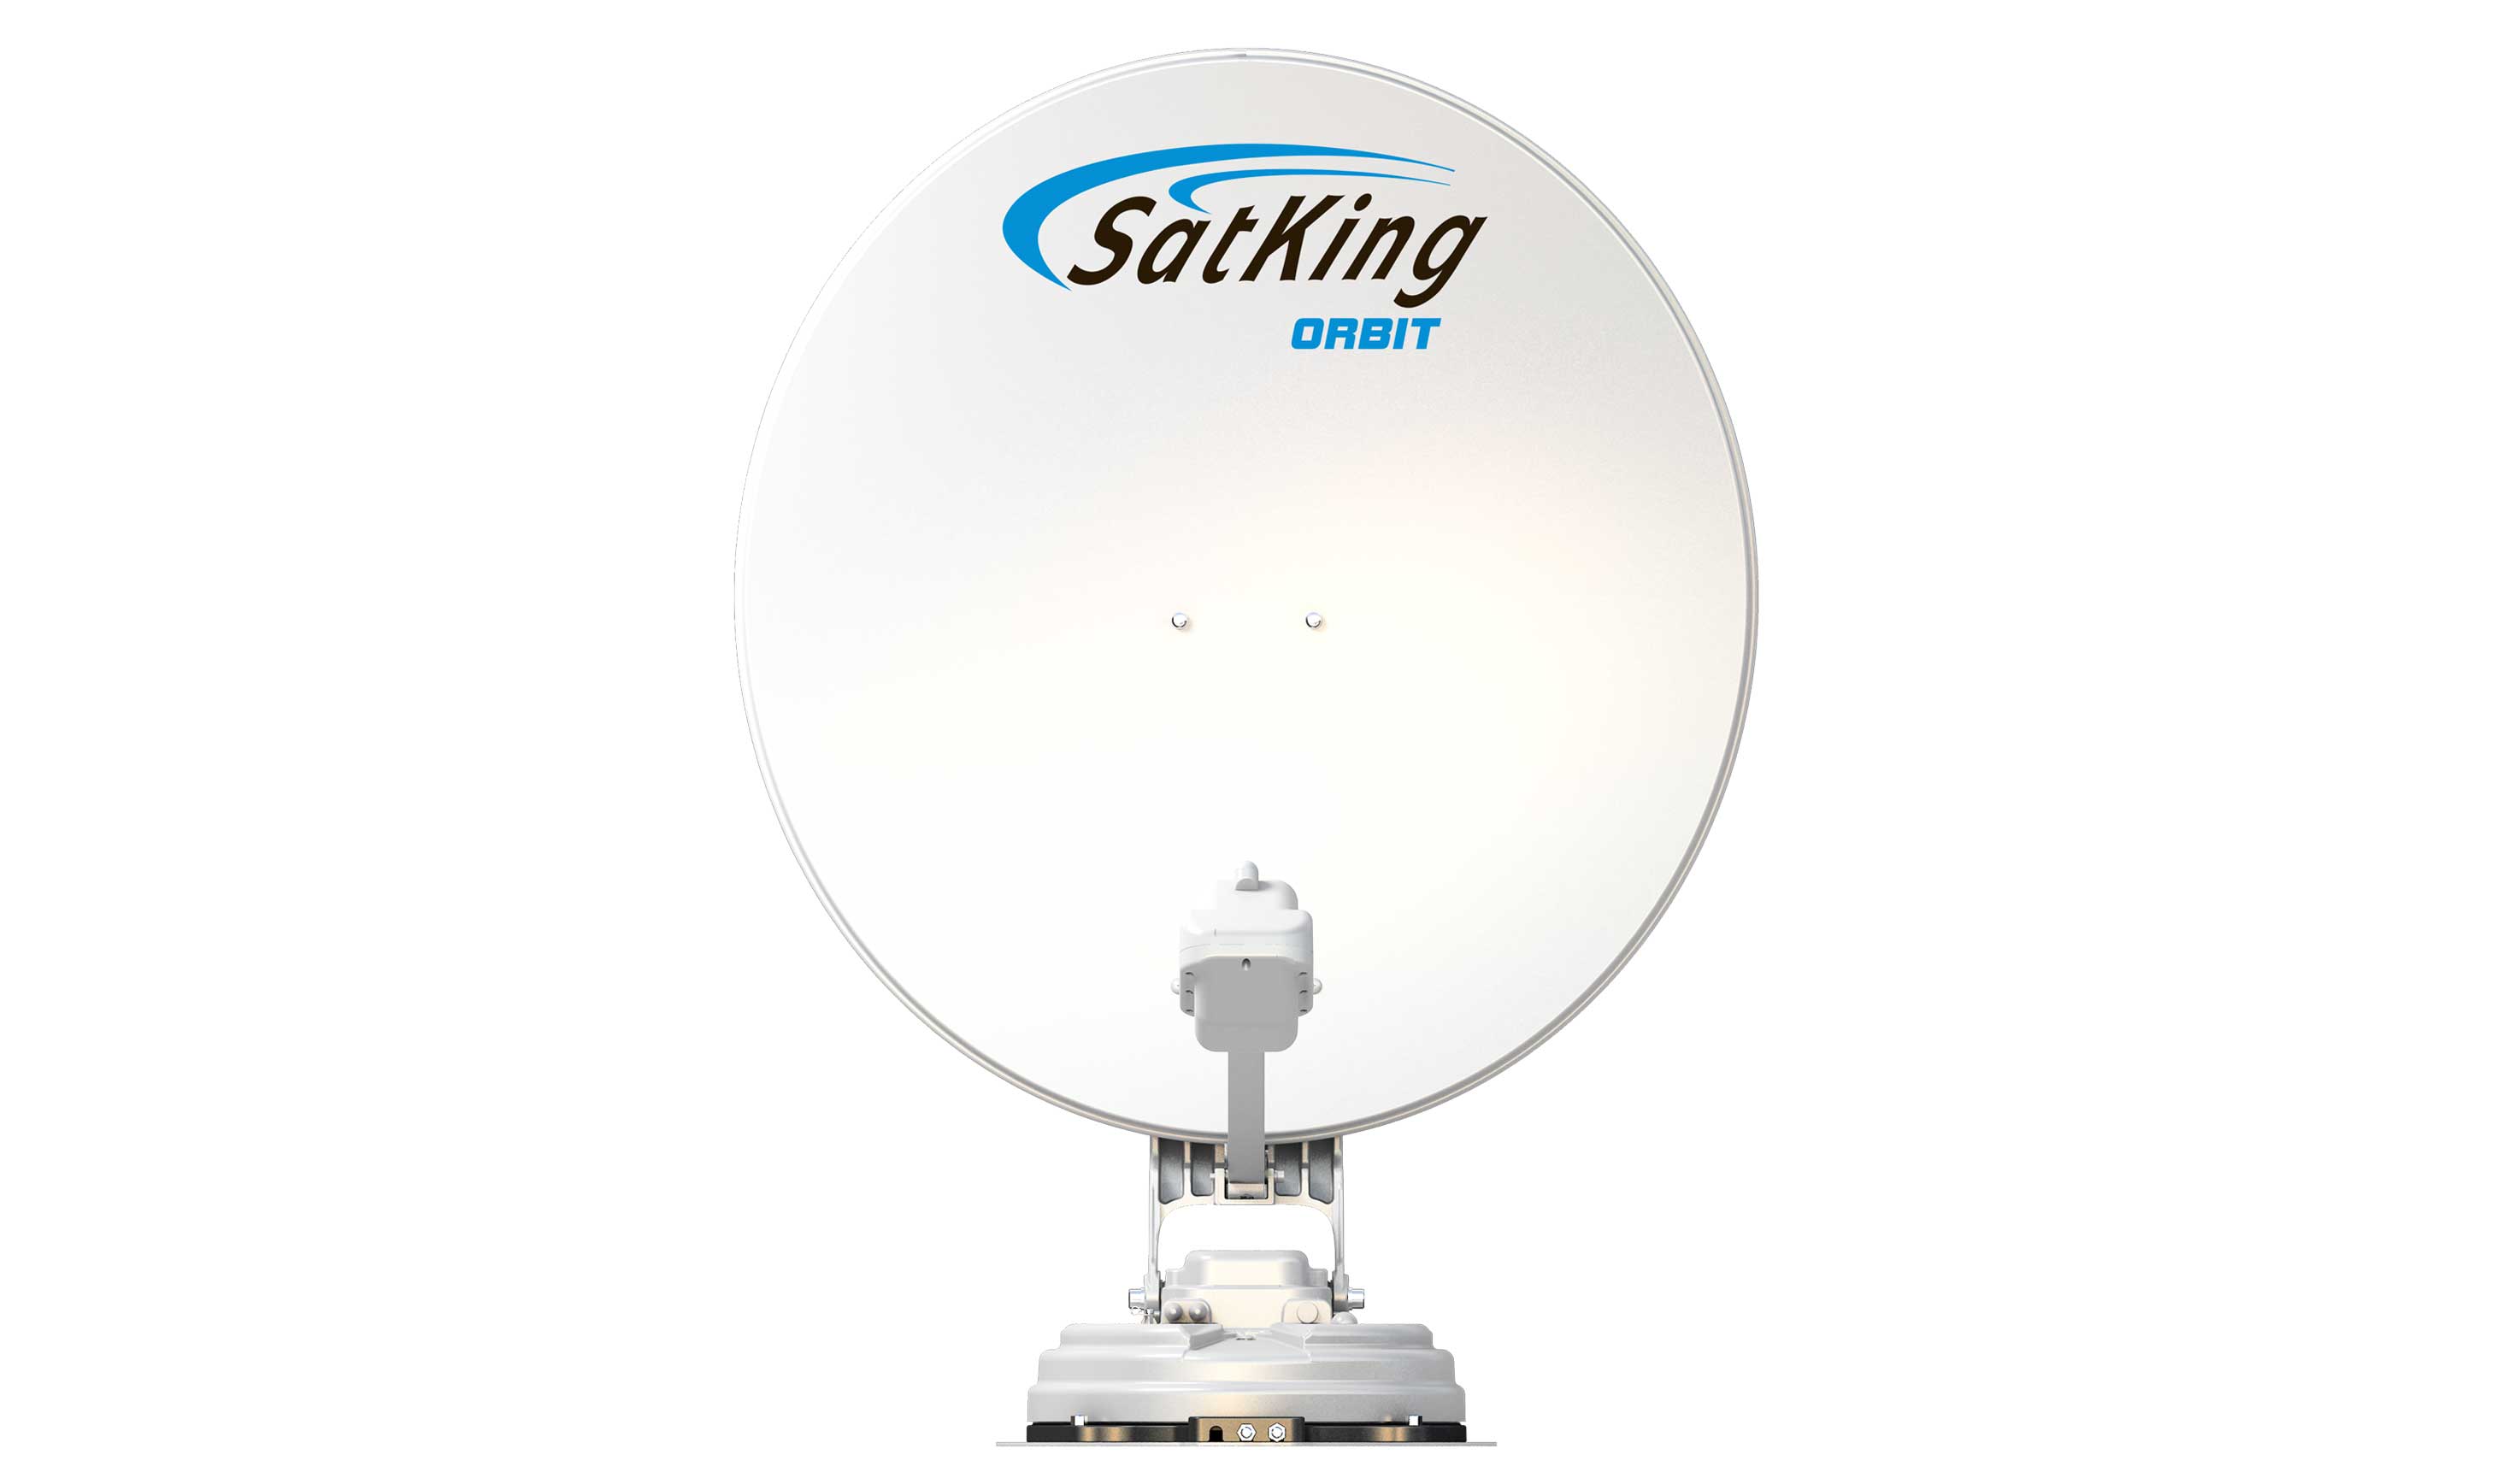 Satking Orbit Fully Automatic Satellite TV System